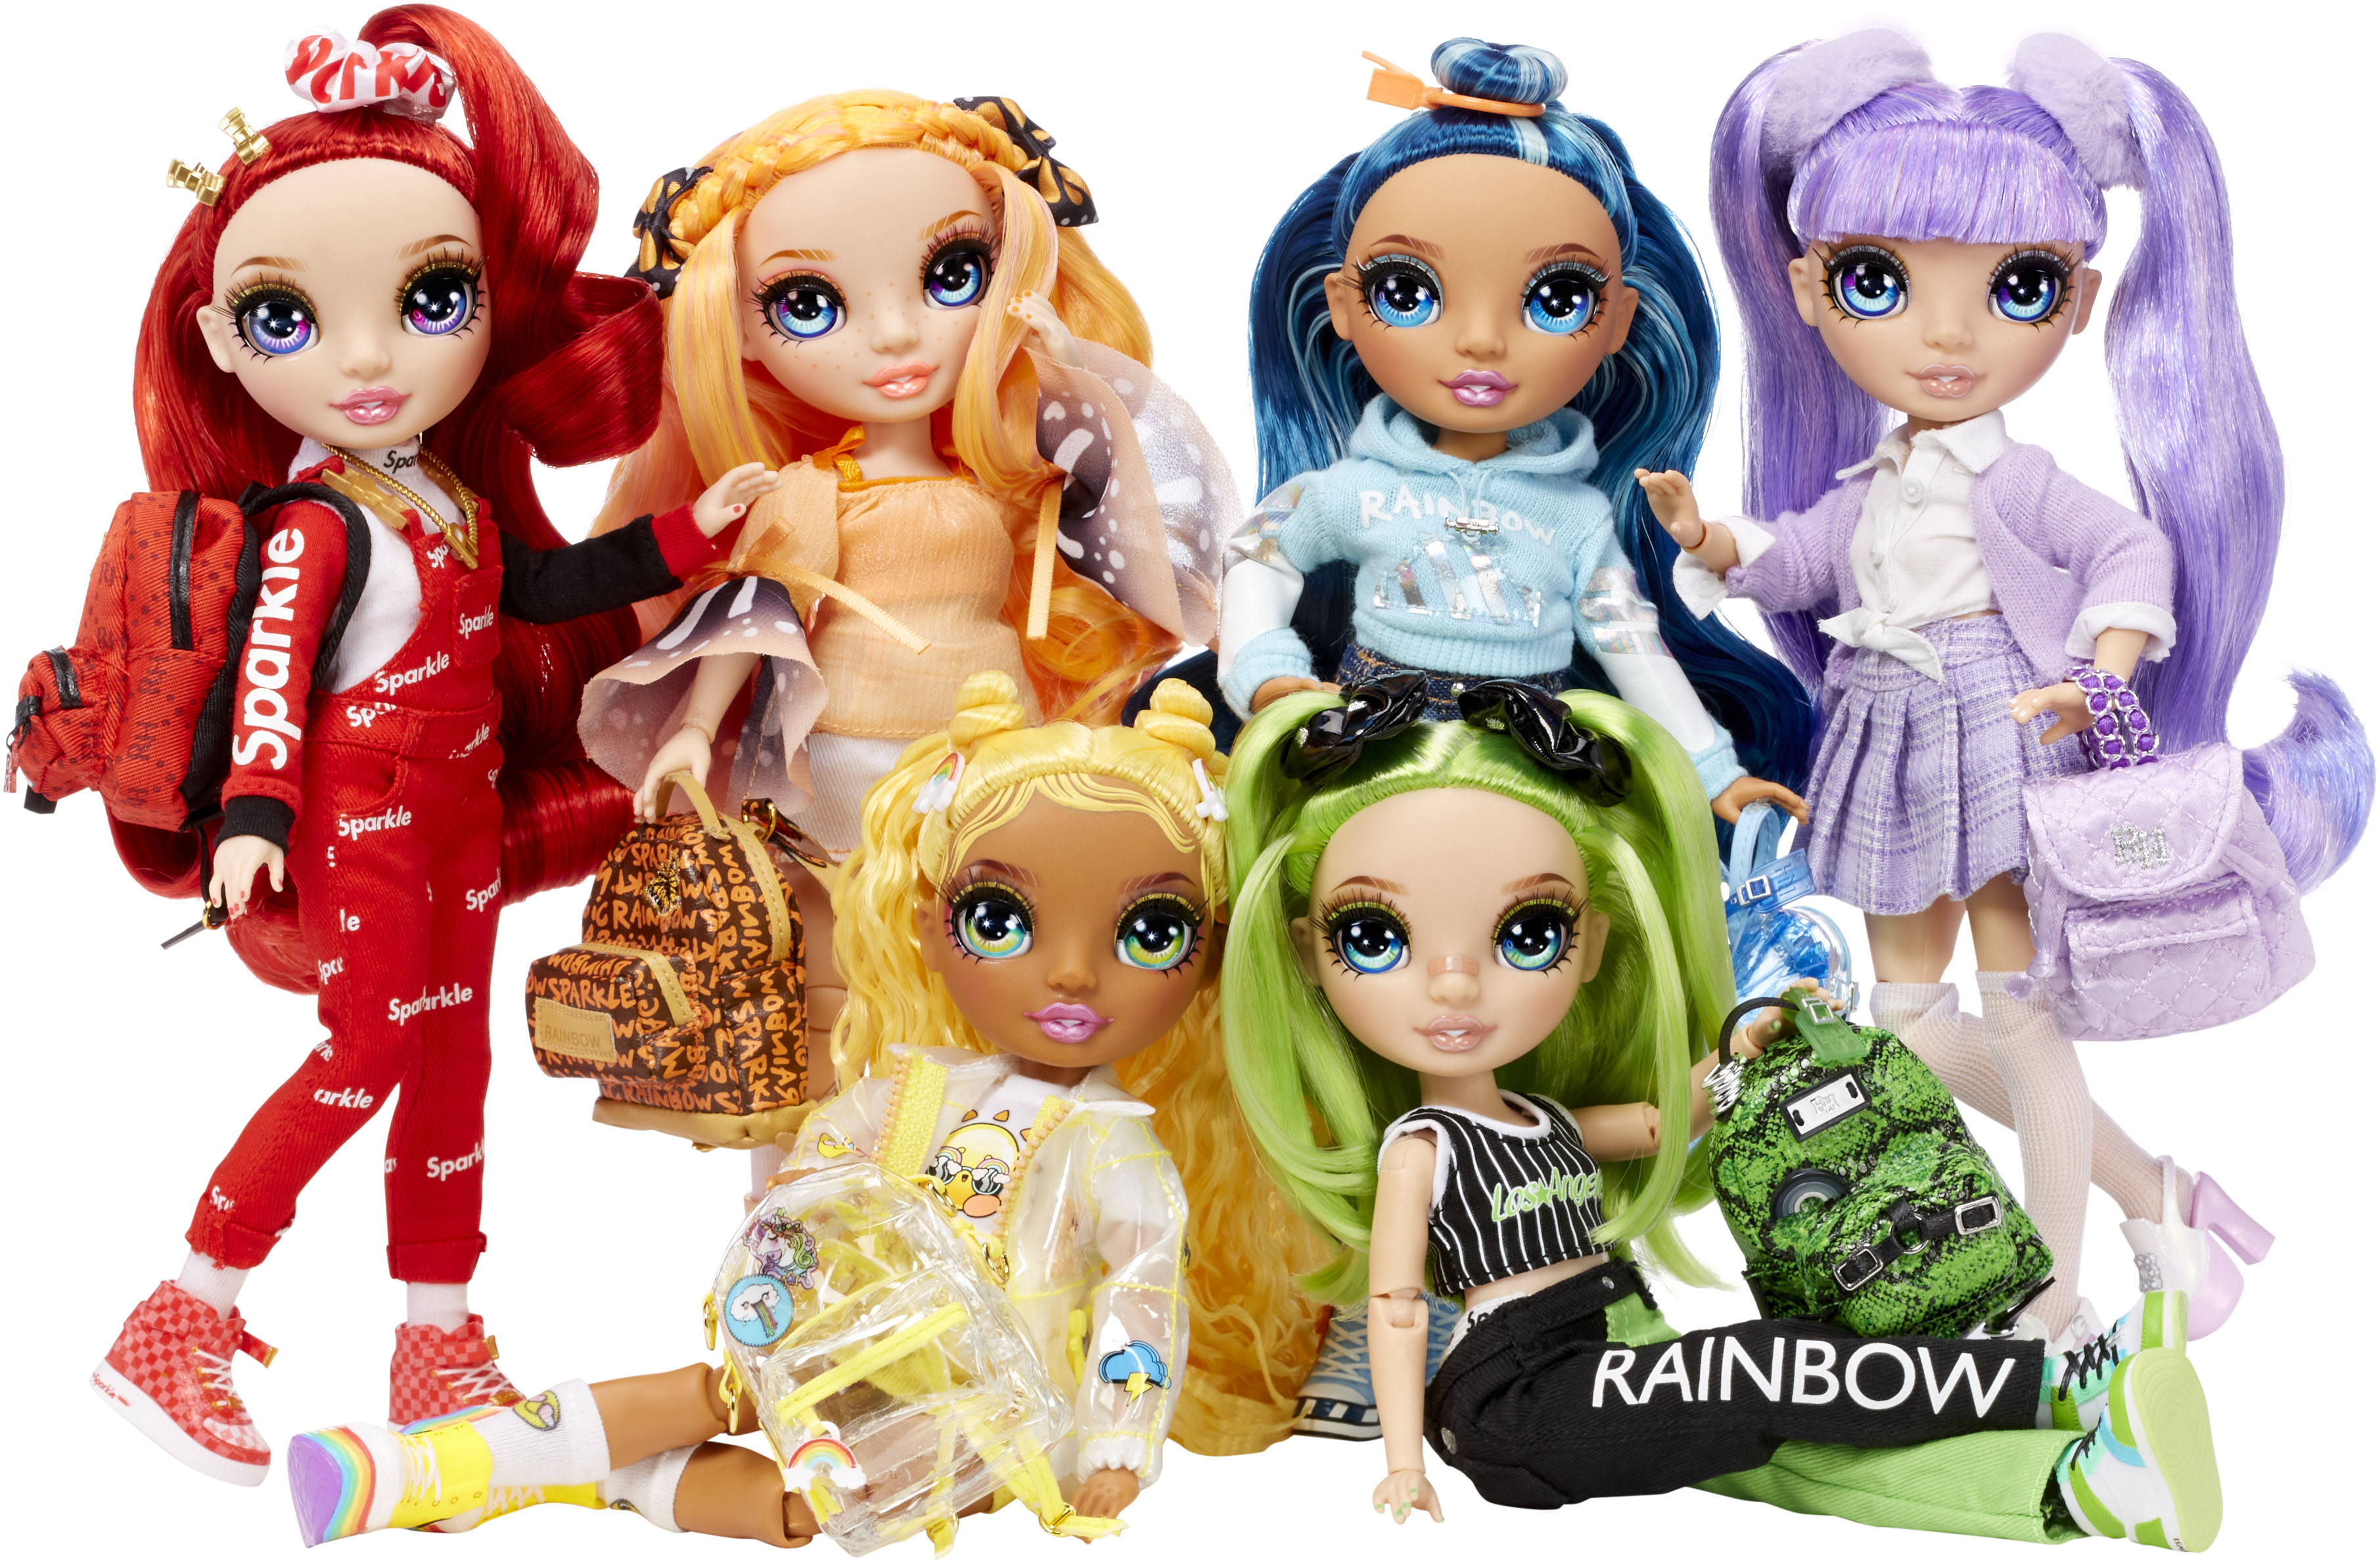 Rainbow High Fashion Dolls - Ruby Anderson Rainbow High Review